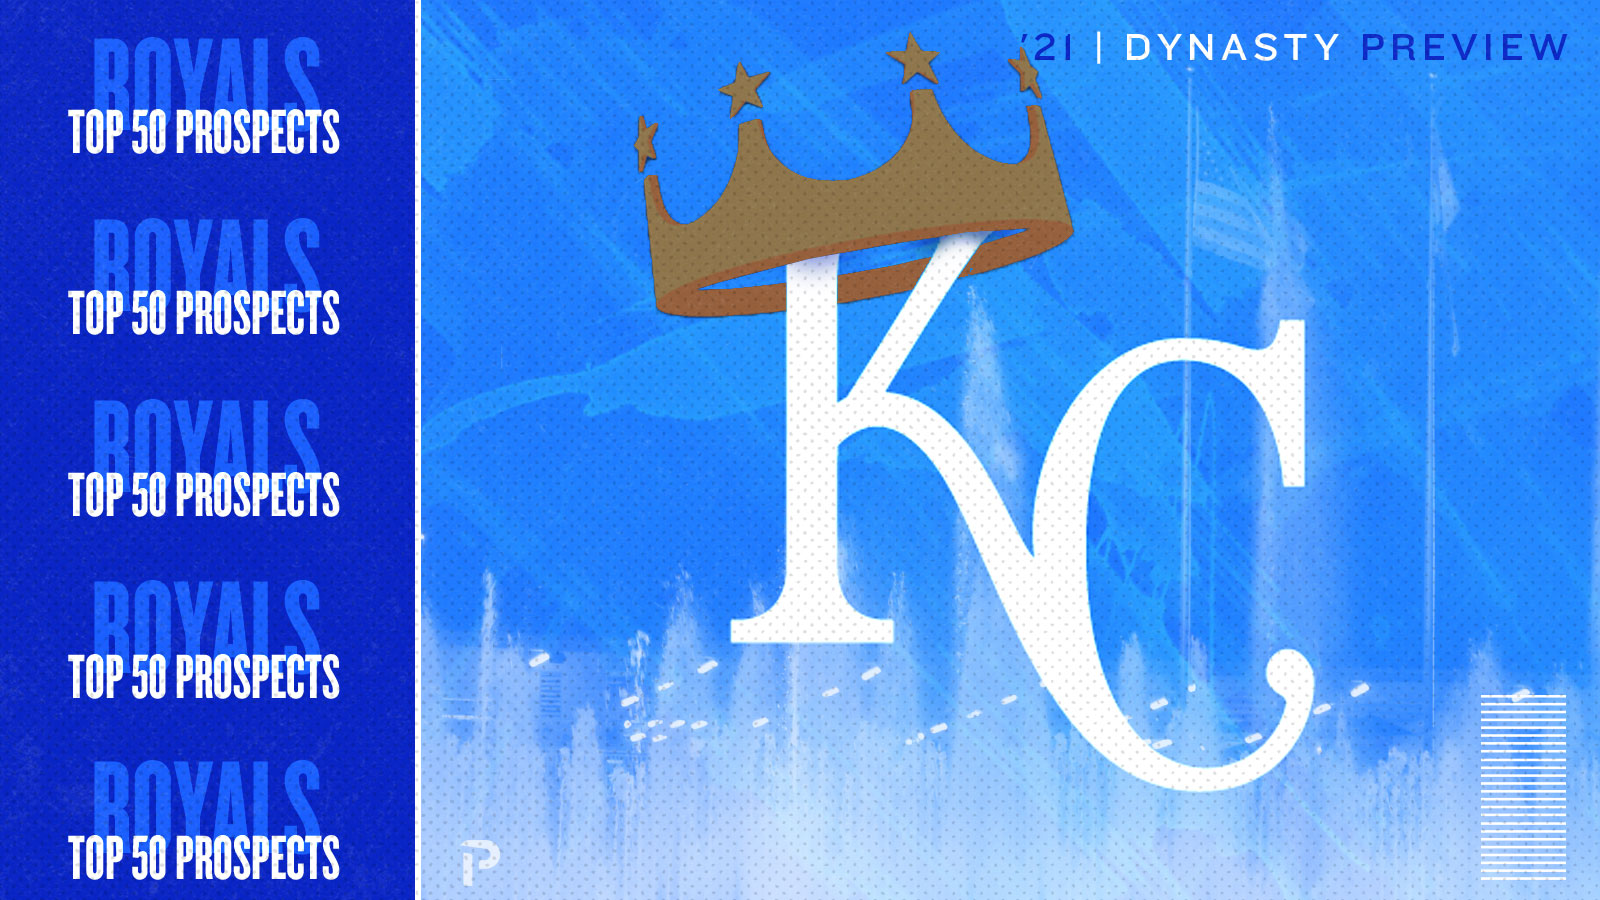 Kansas City Royals iPhone 5 wallpaper background  Kansas city royals, Kansas  city royals logo, Royal logo